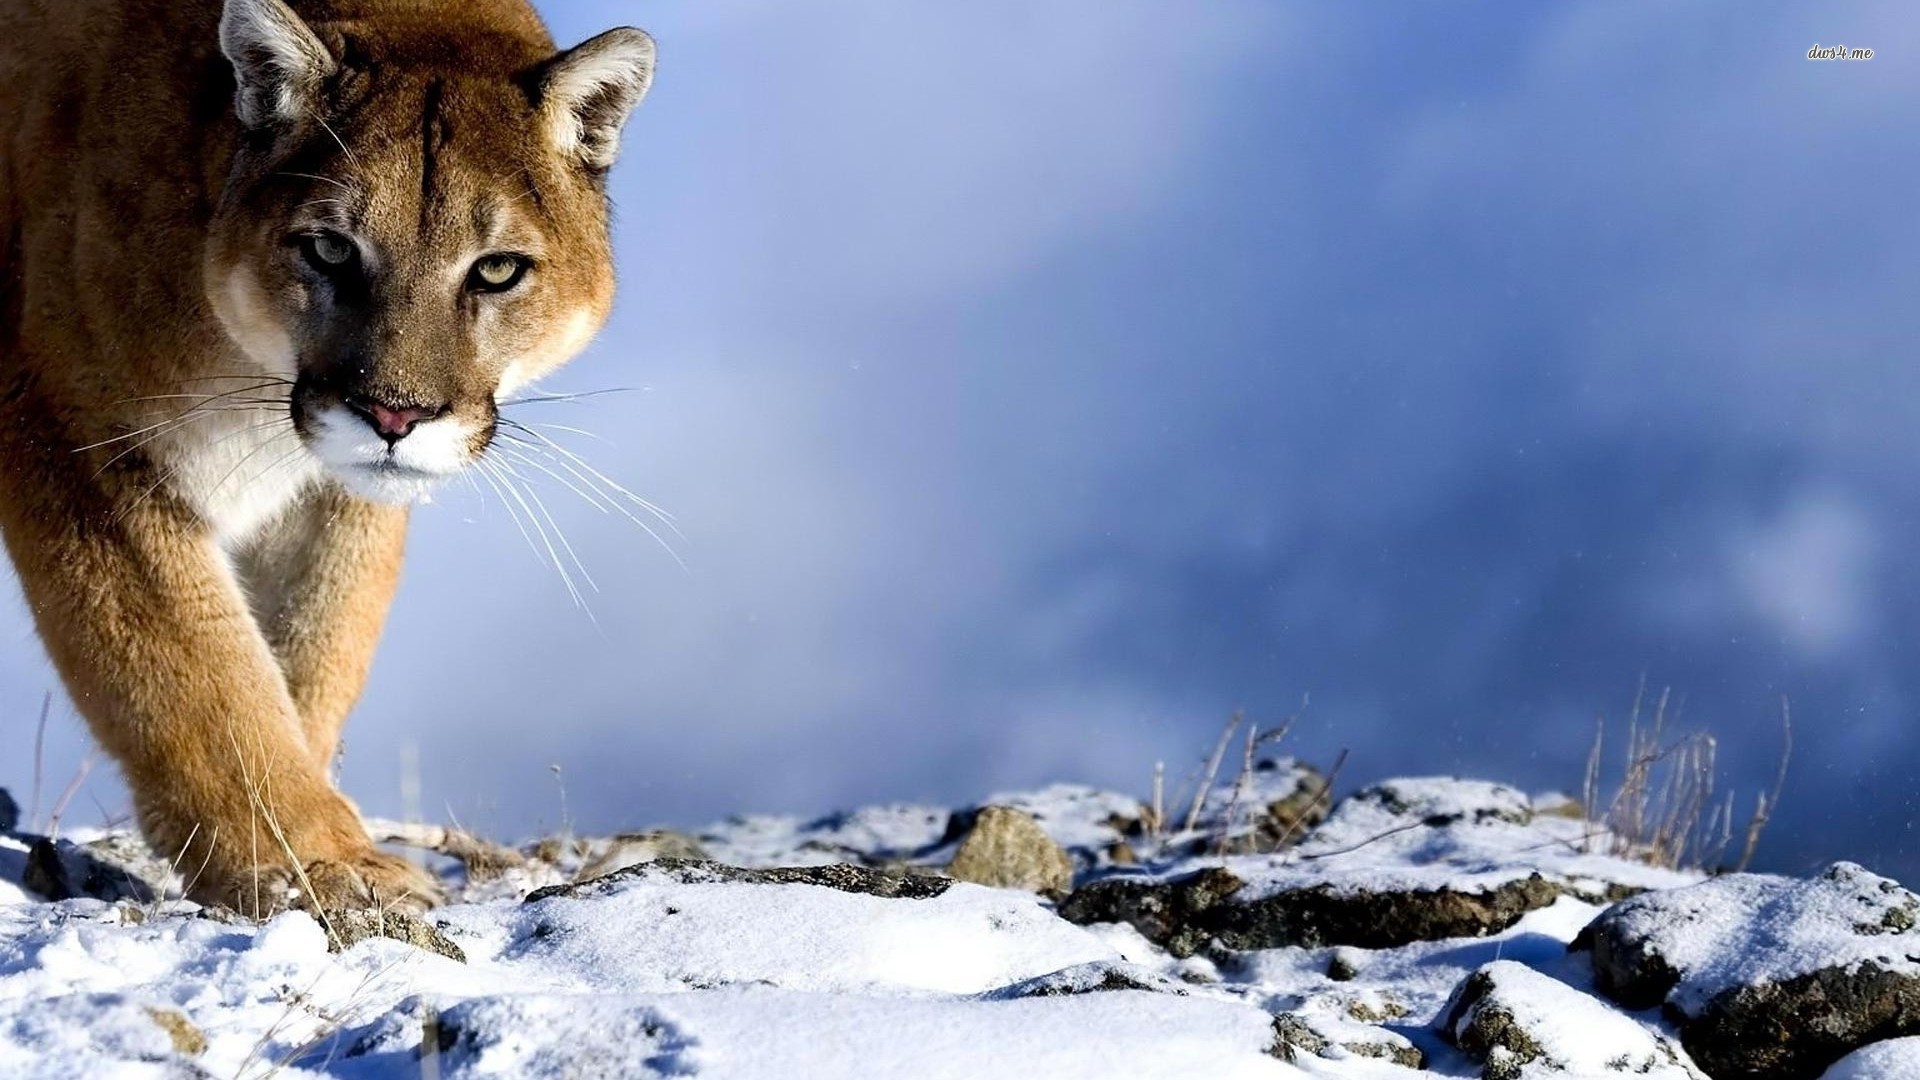 Cougar wallpaper - Animal wallpapers -